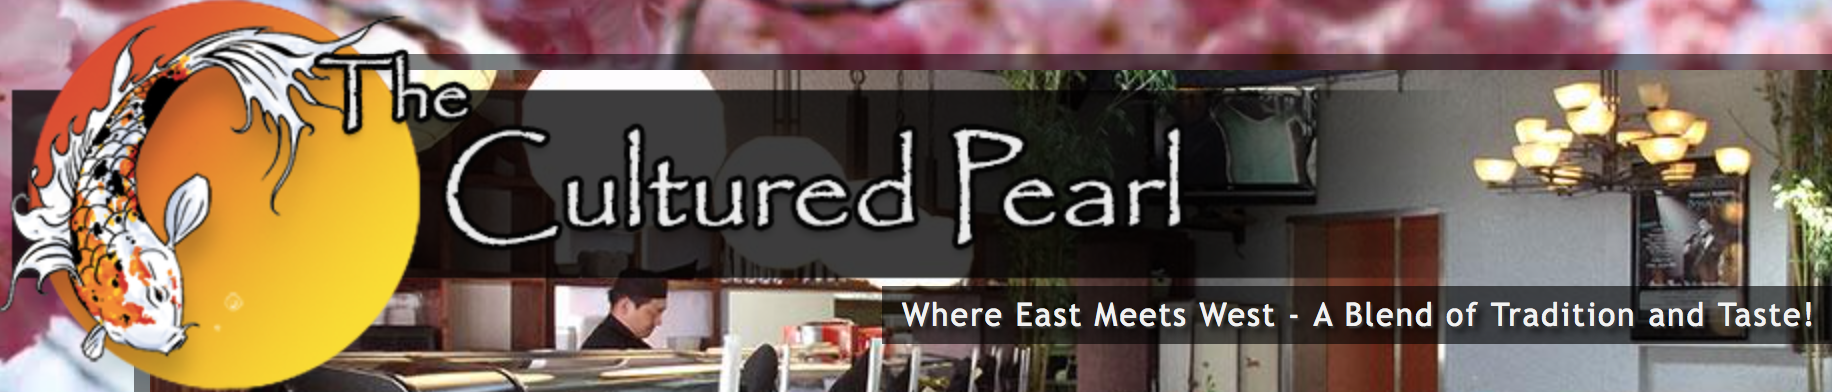 Cultured Pearl Restaurant